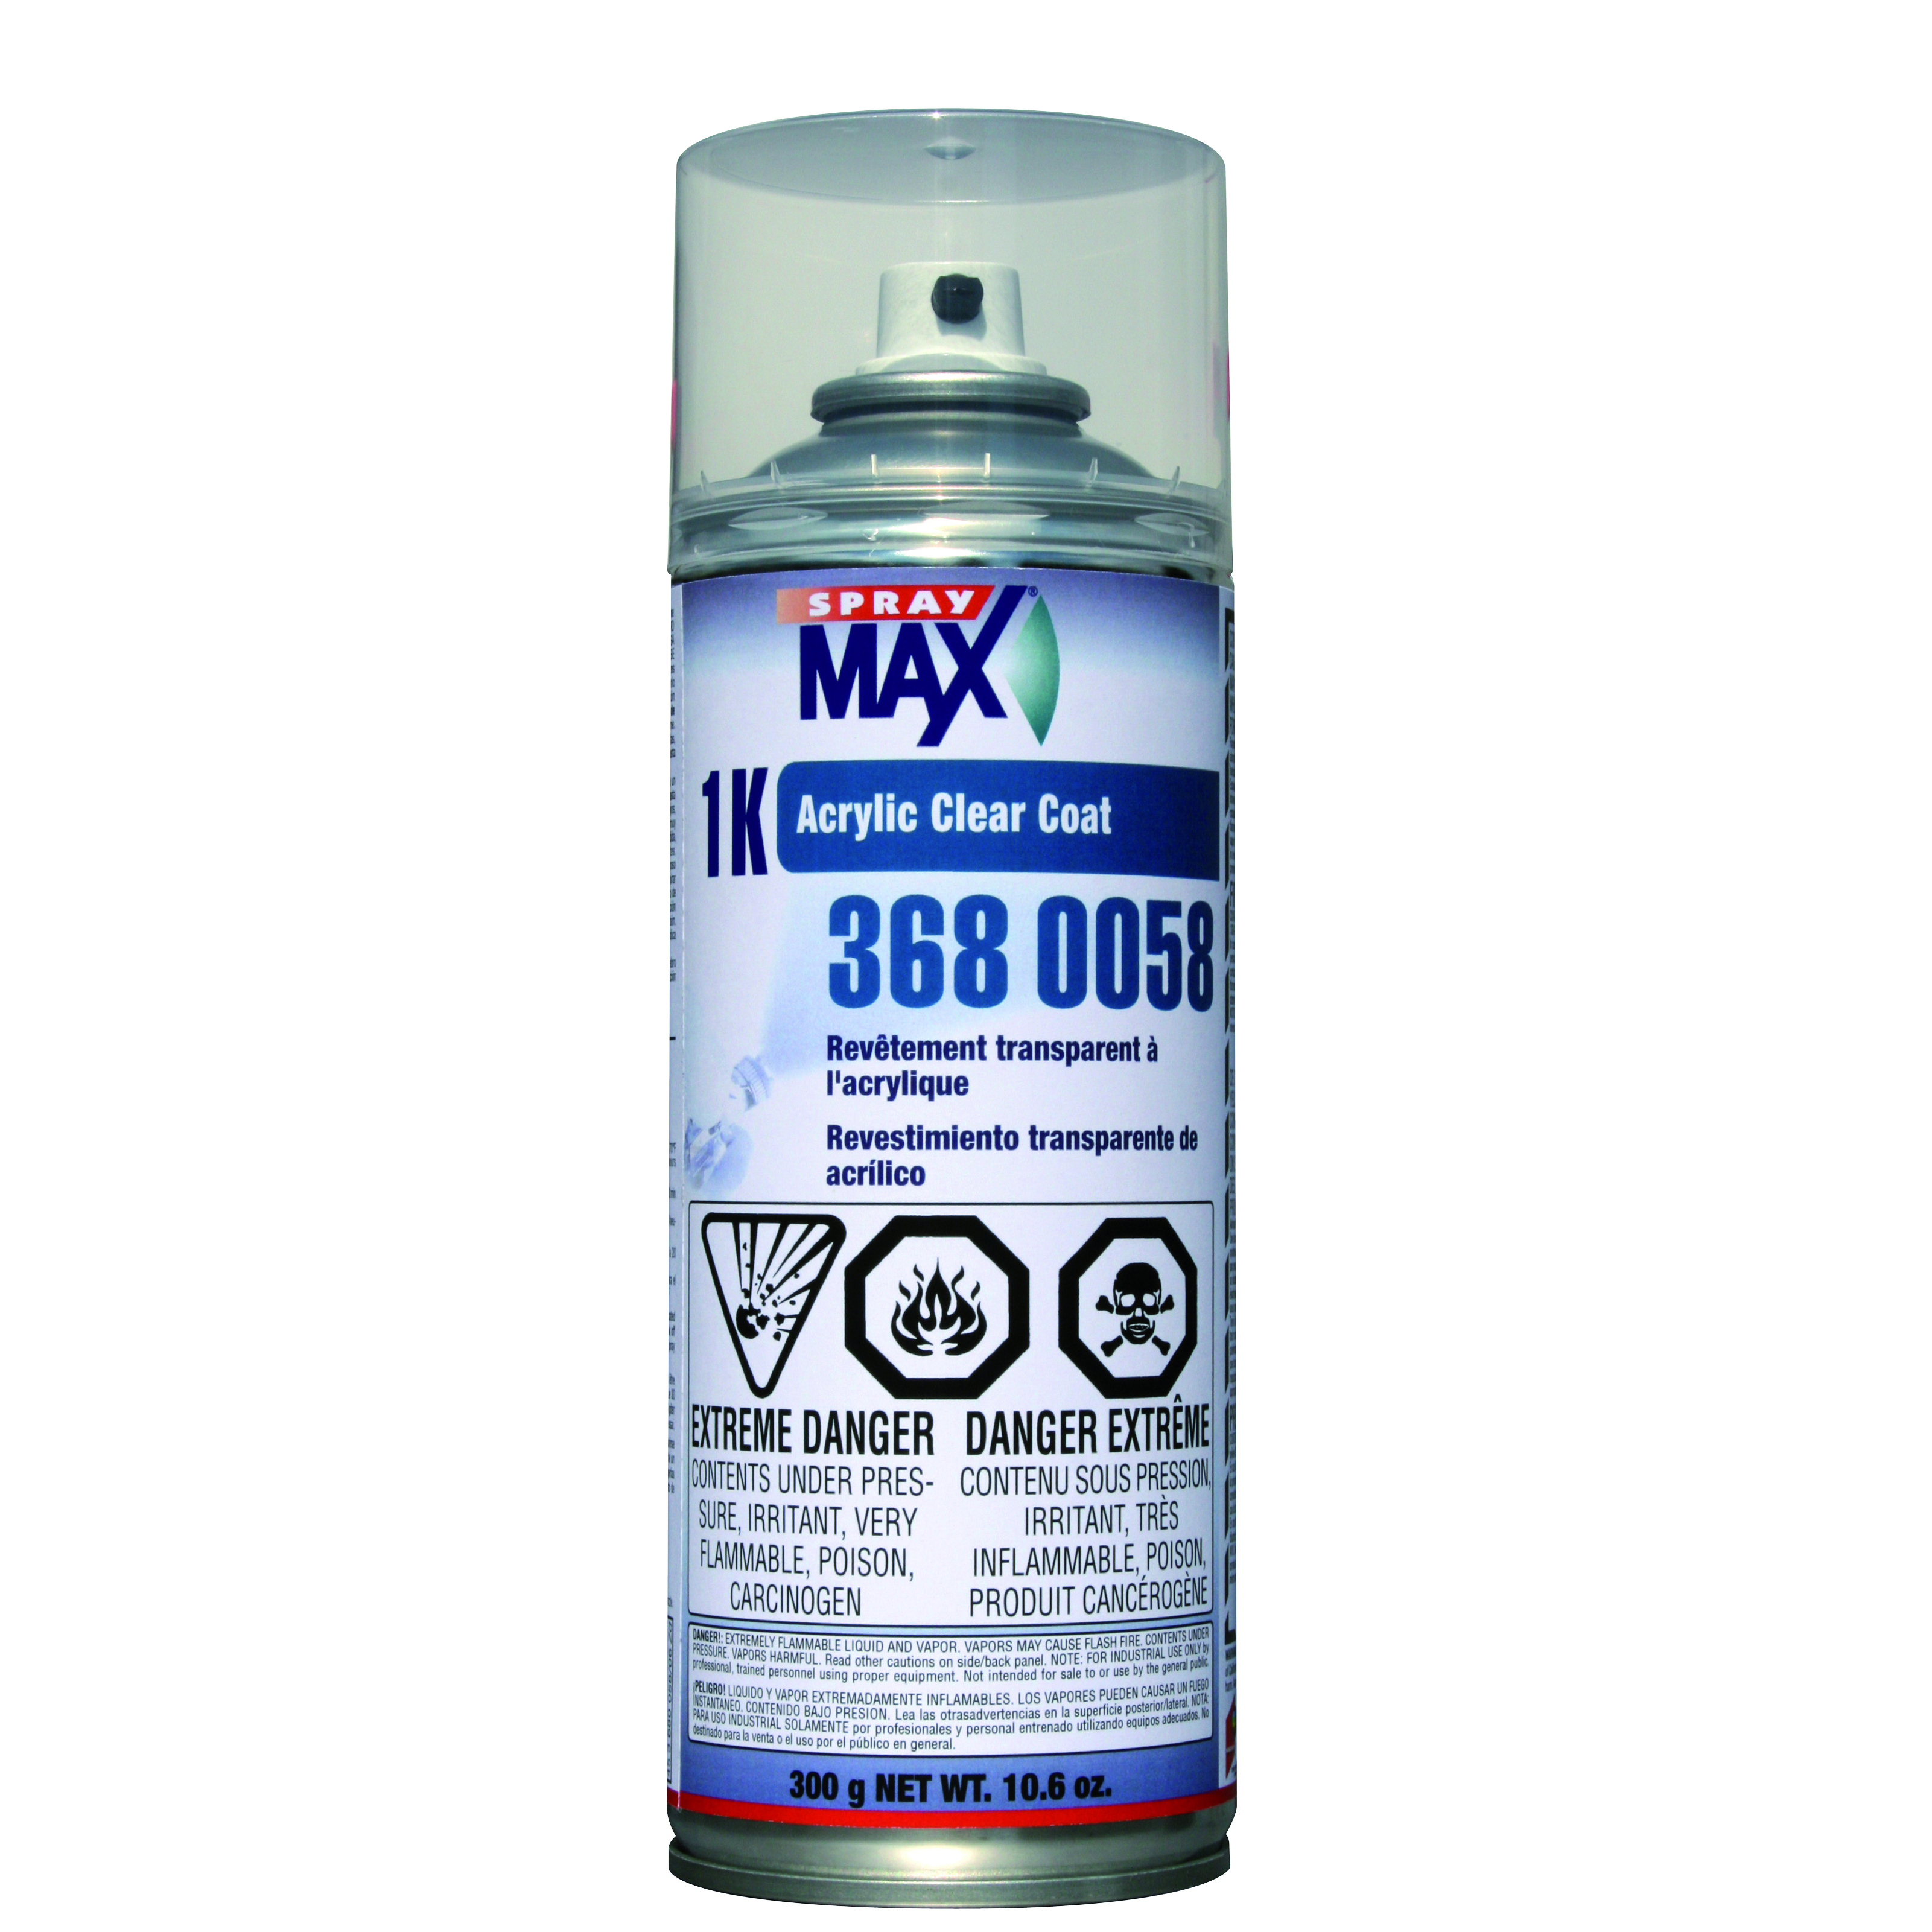 SprayMax 1K Acrylic Clearcoat, 3680058